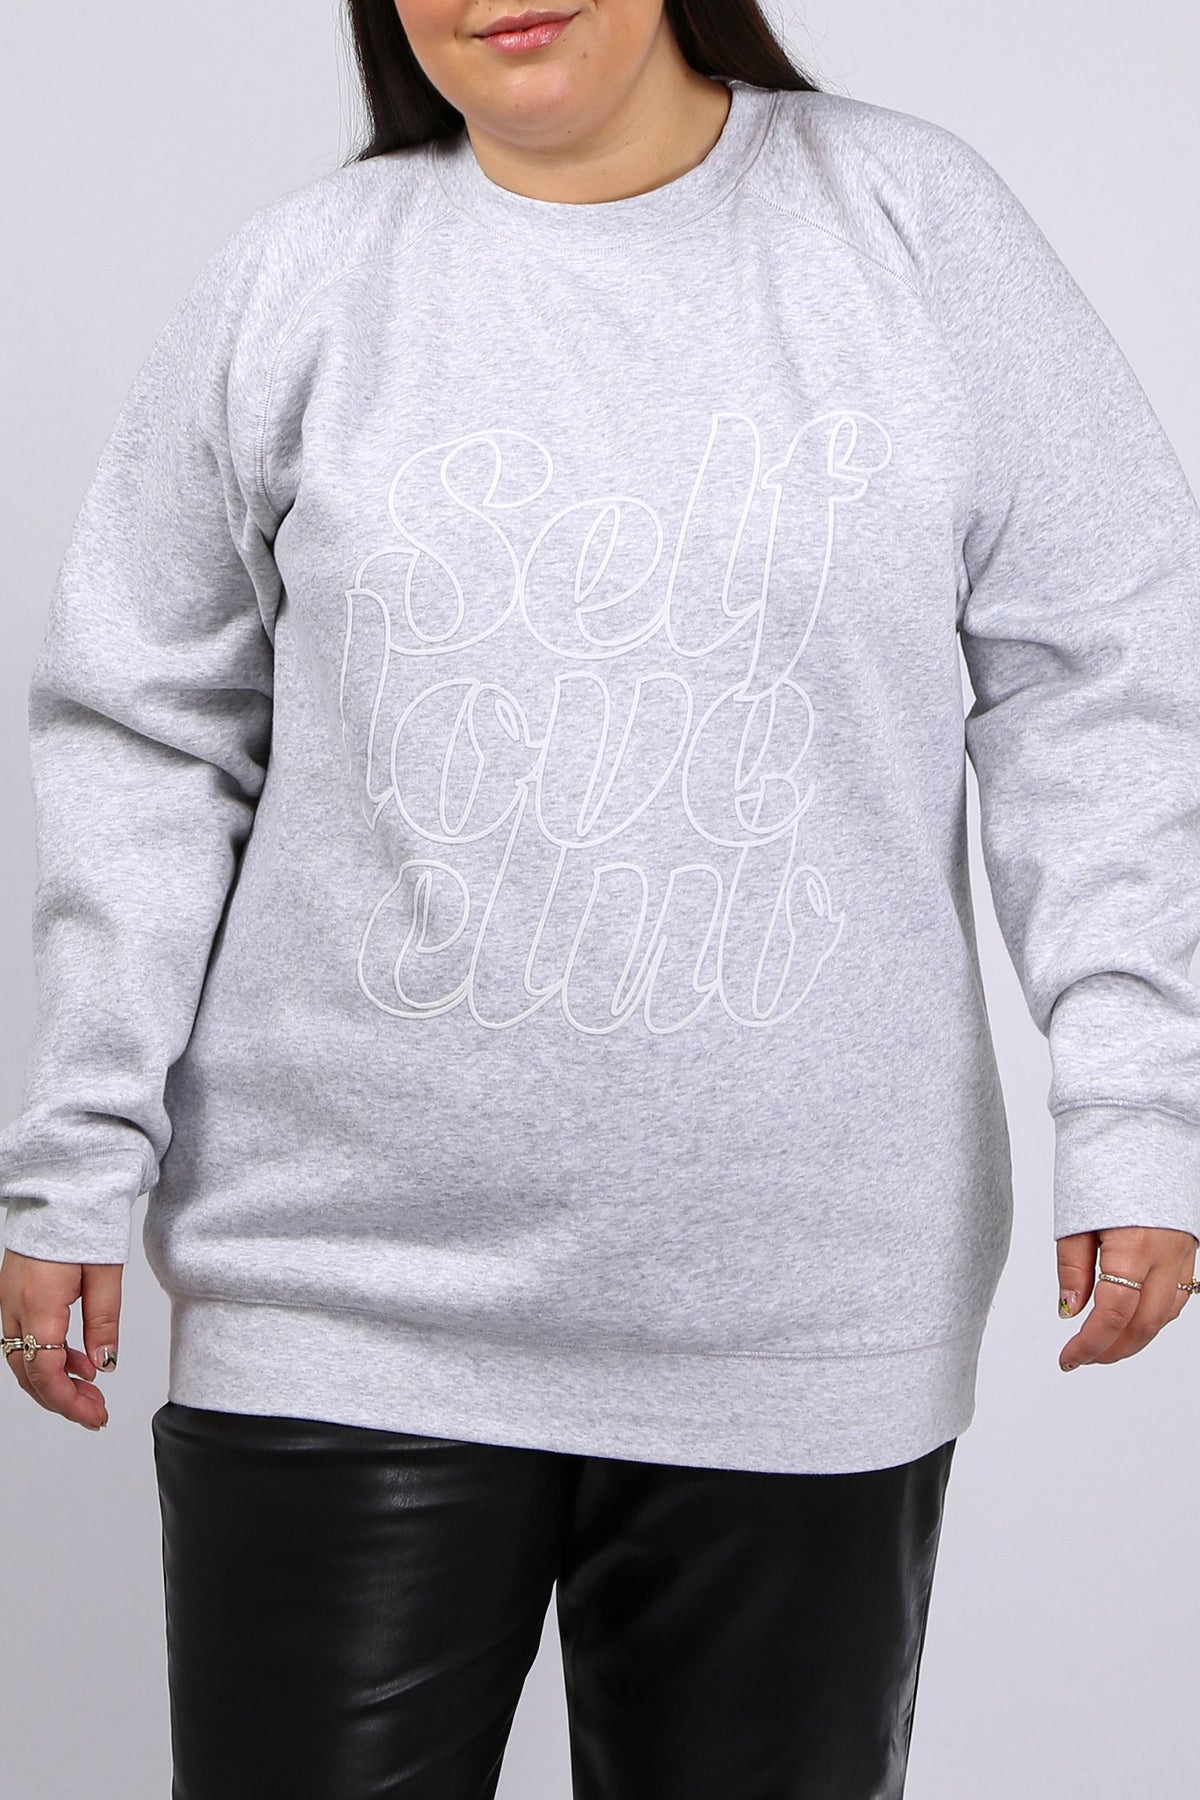 The "SELF LOVE" Big Sister Crew Neck Sweatshirt | Pebble Grey